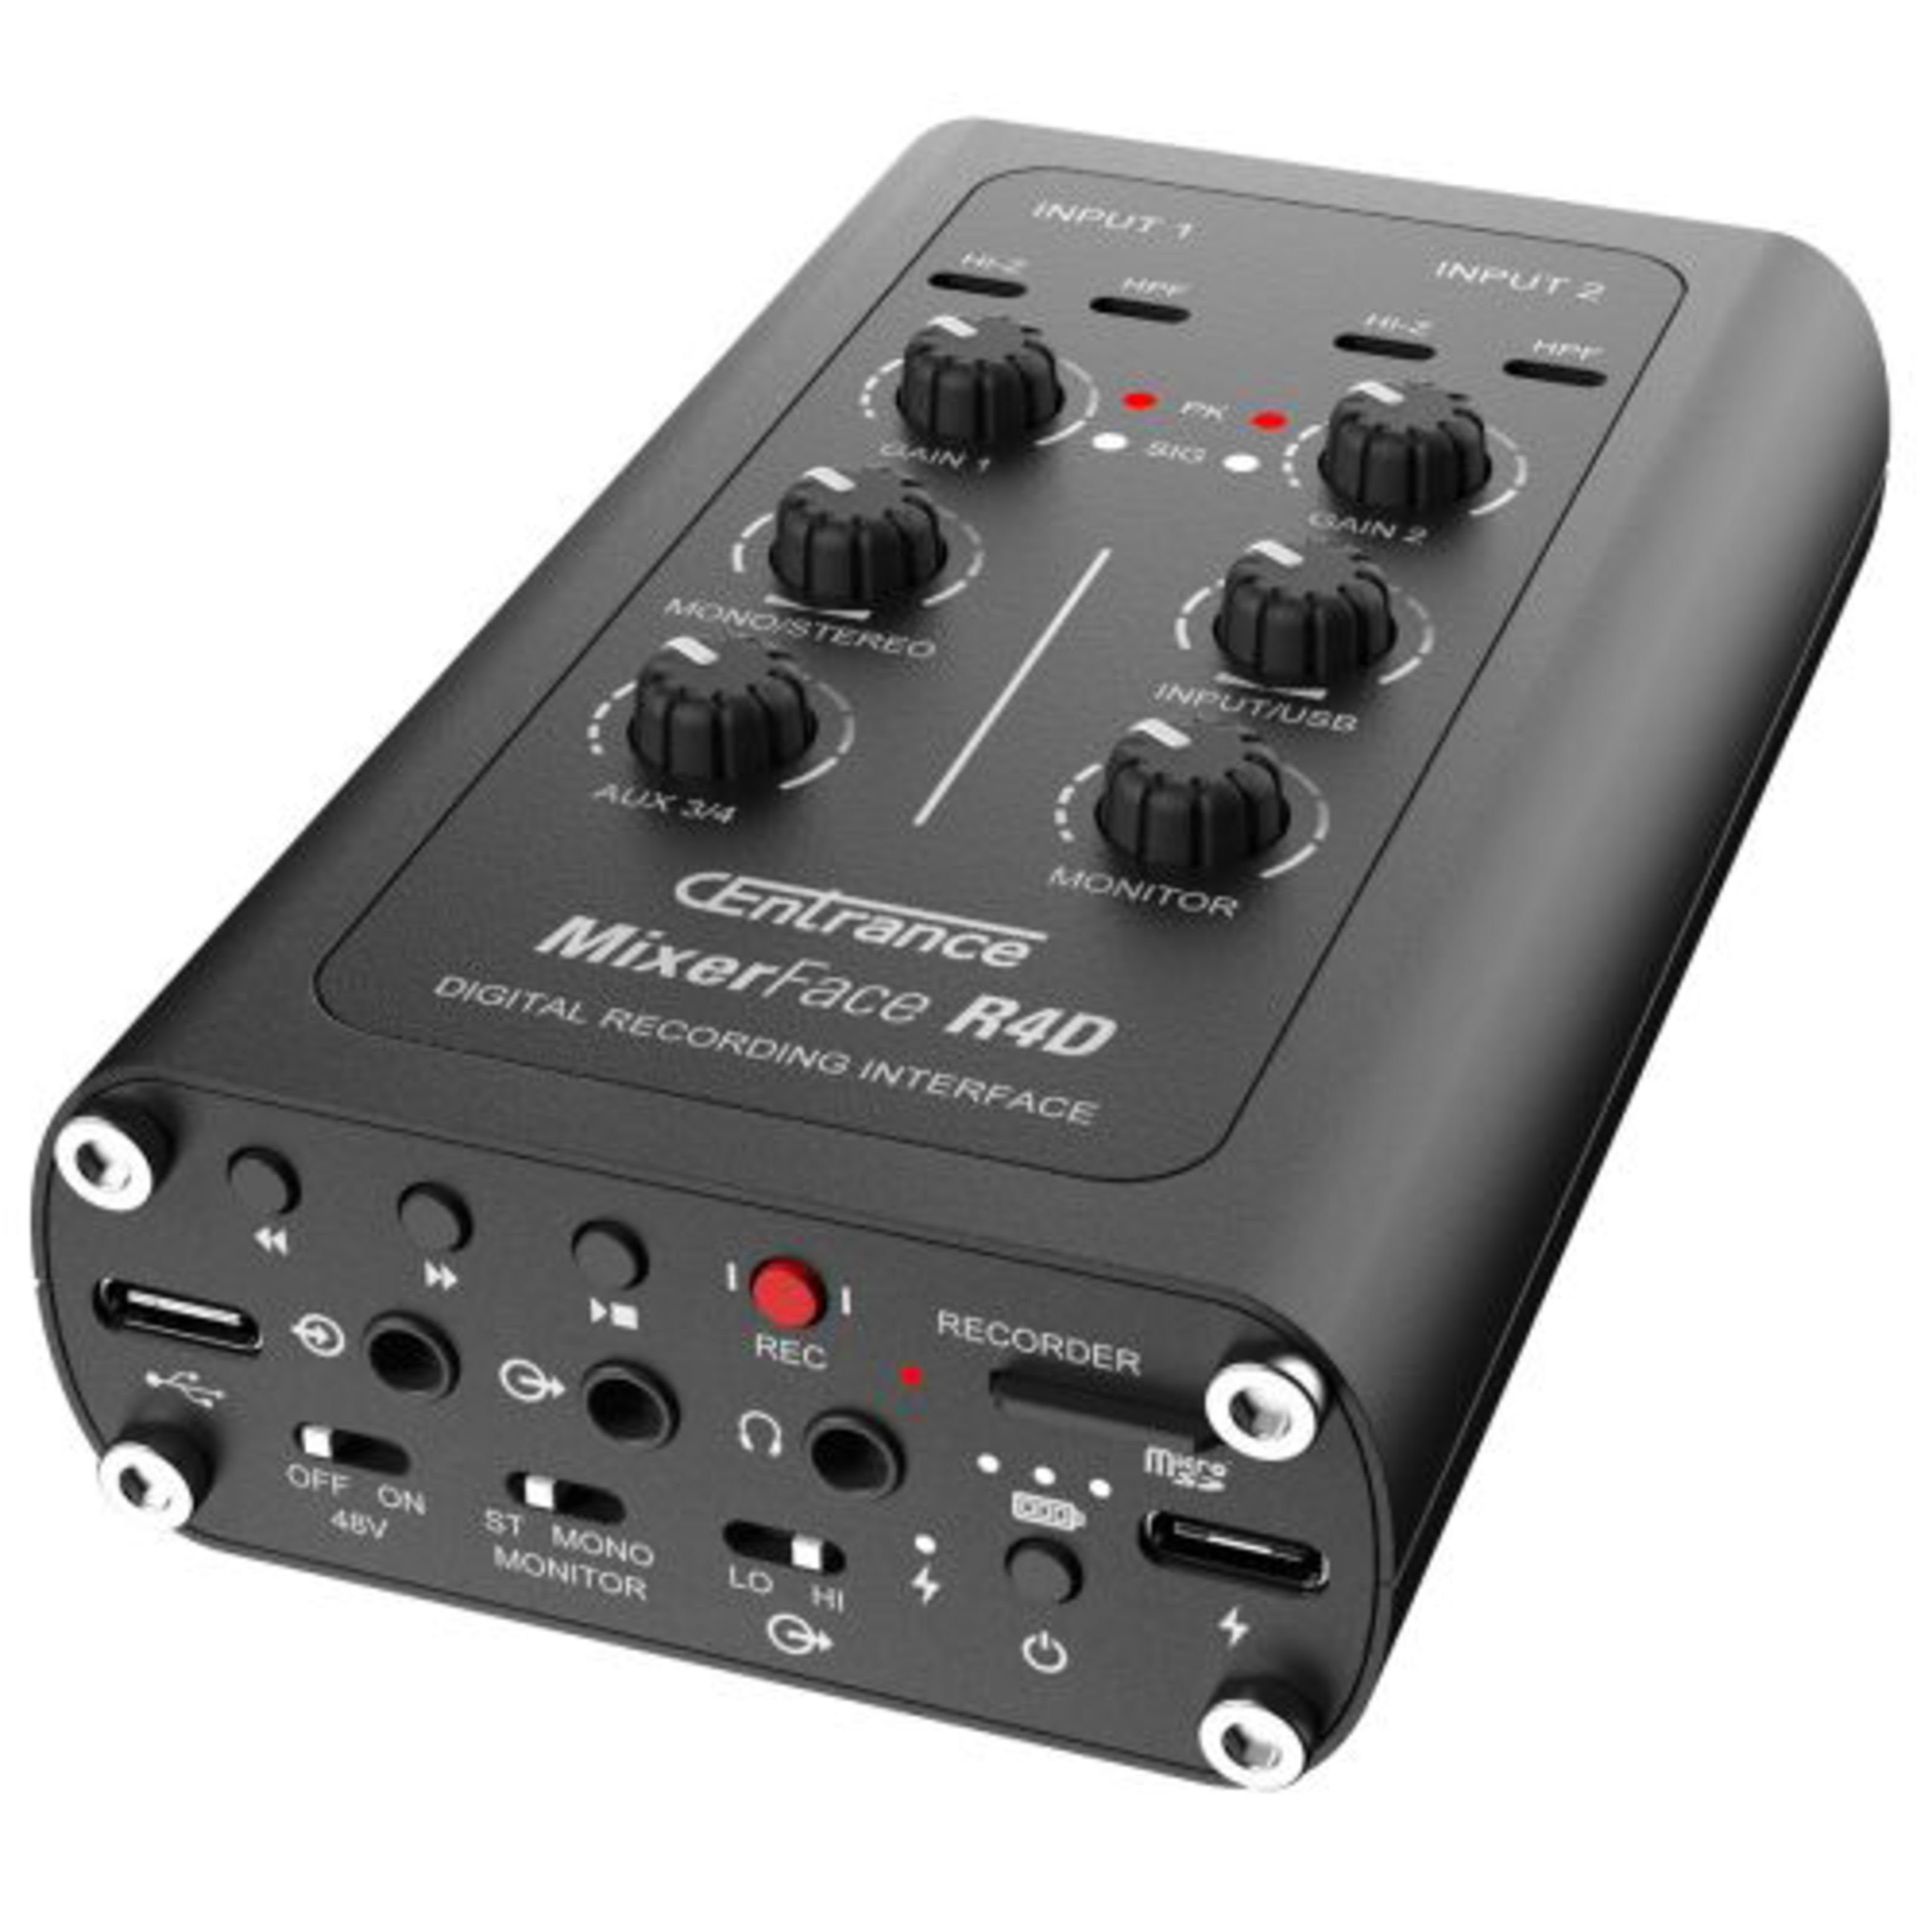 Centrance Spielzeug-Musikinstrument, MixerFace R4D mobiles Audio-Interface  - USB Audio Interface